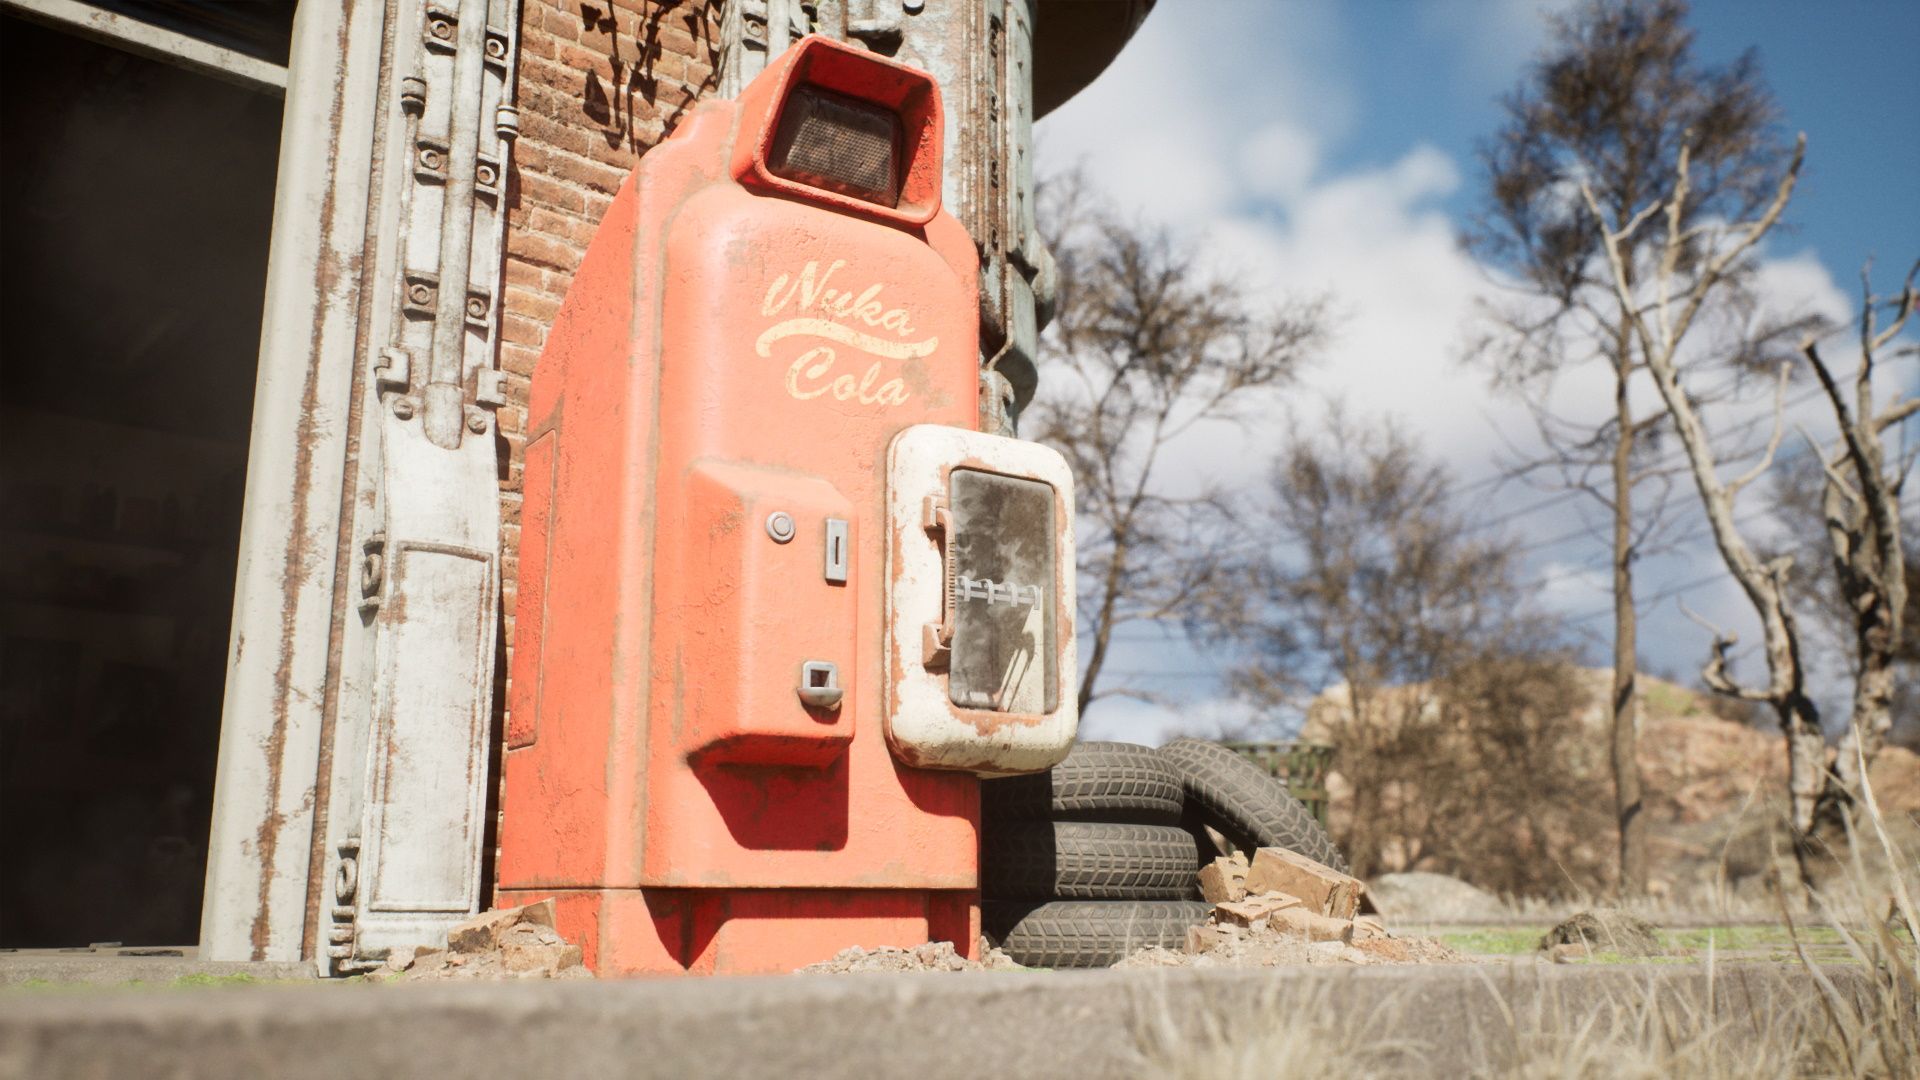 Red Rocket из Fallout 4 на Unreal Engine 5. Источник: artstation.com